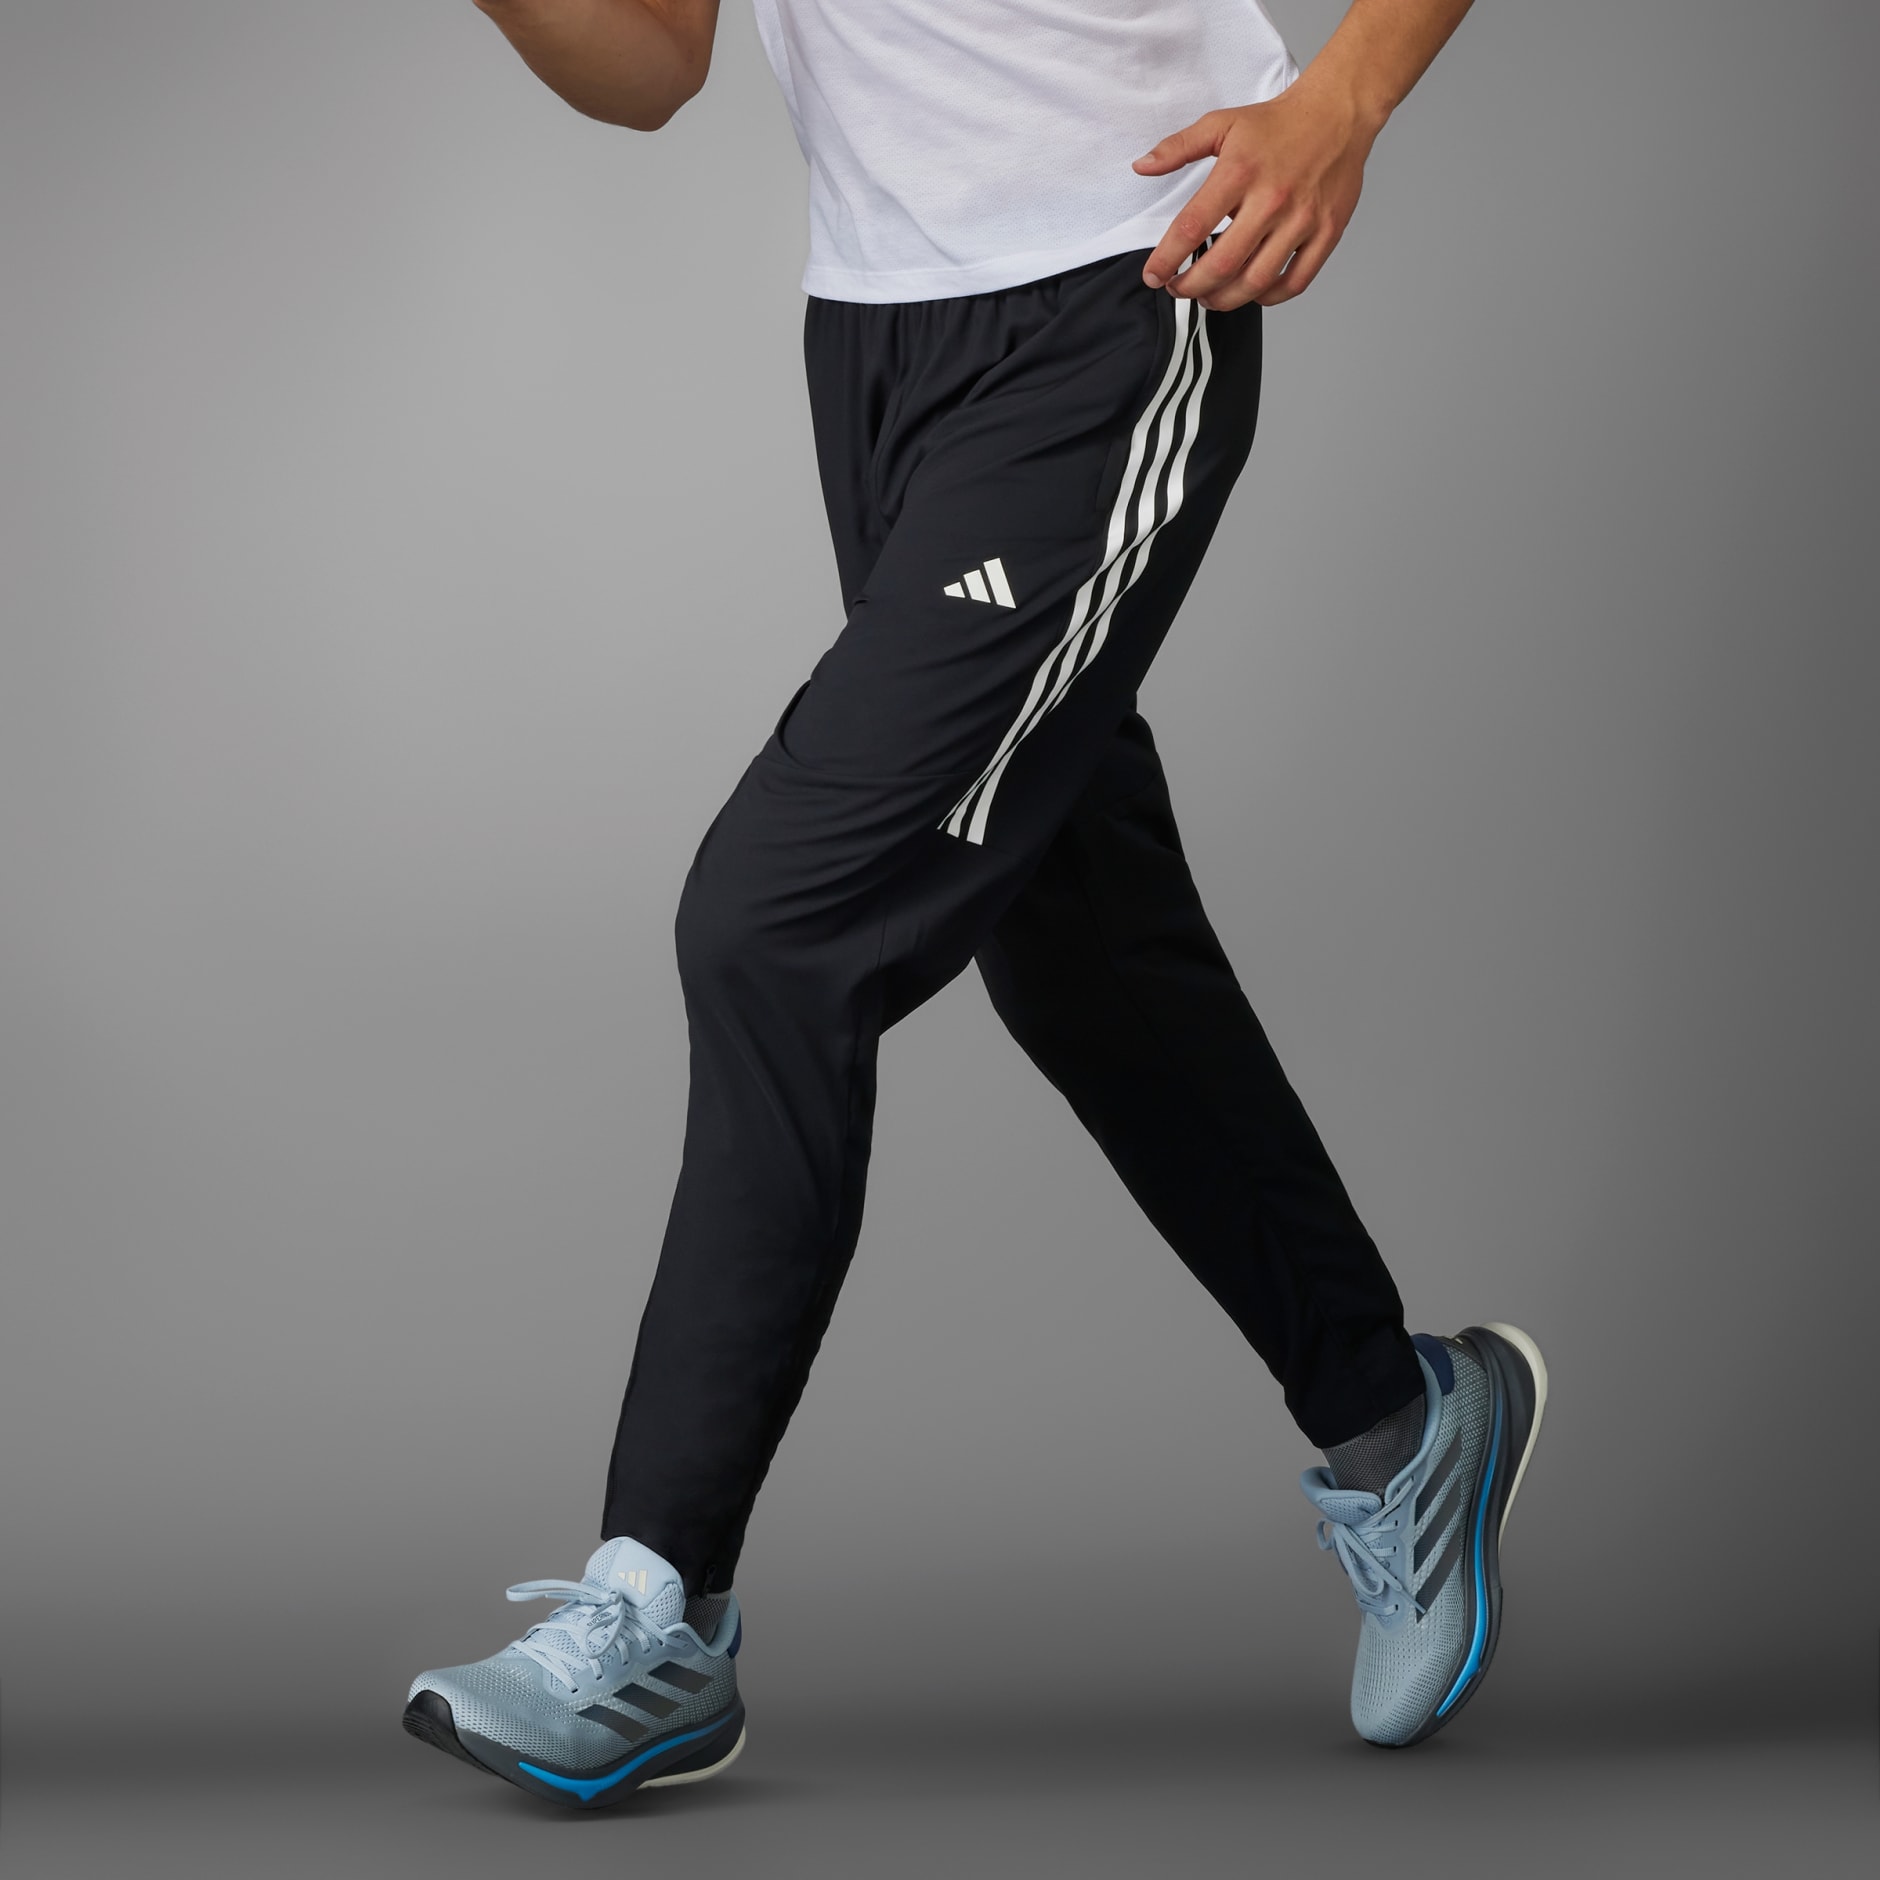 Adidas Aeroready Sereno Slim Tapered-Cut 3-Stripes Pants in Orbit Green  Size M | Mens adidas pants, Soccer pants, Pants